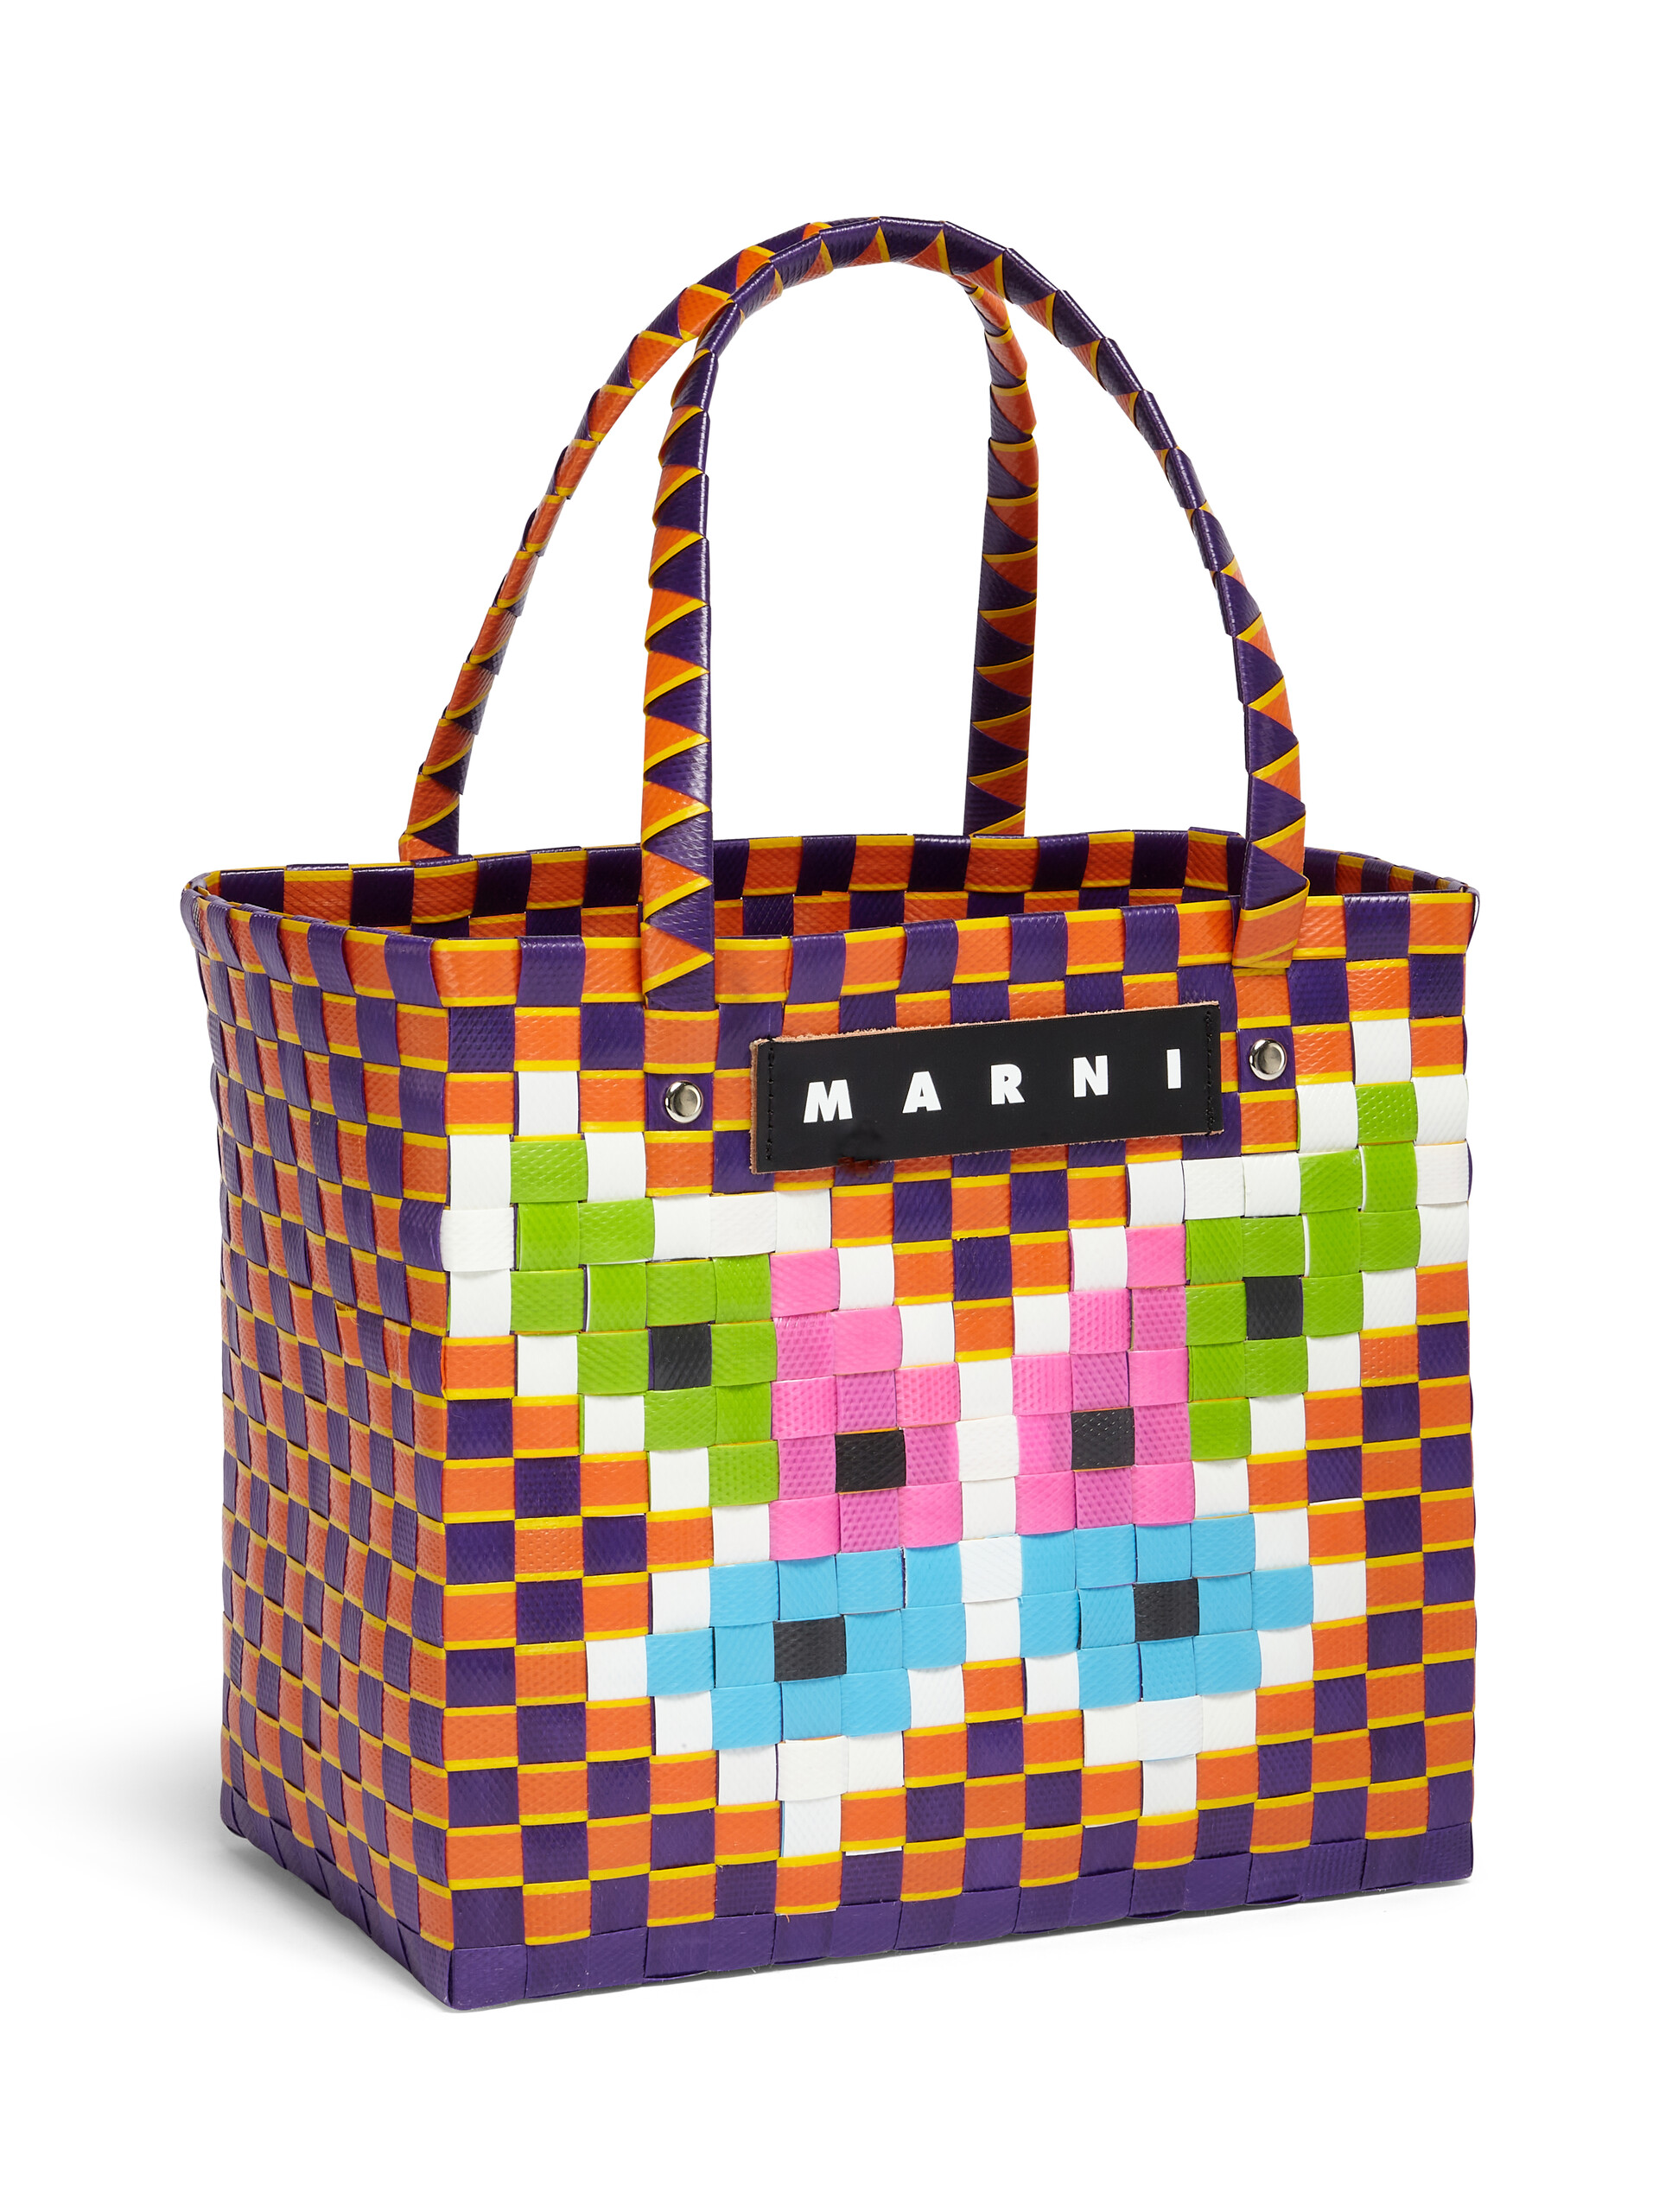 MARNI MARKET FLOWER MINI BASKET bag in orange butterfly motif - Bags - Image 4